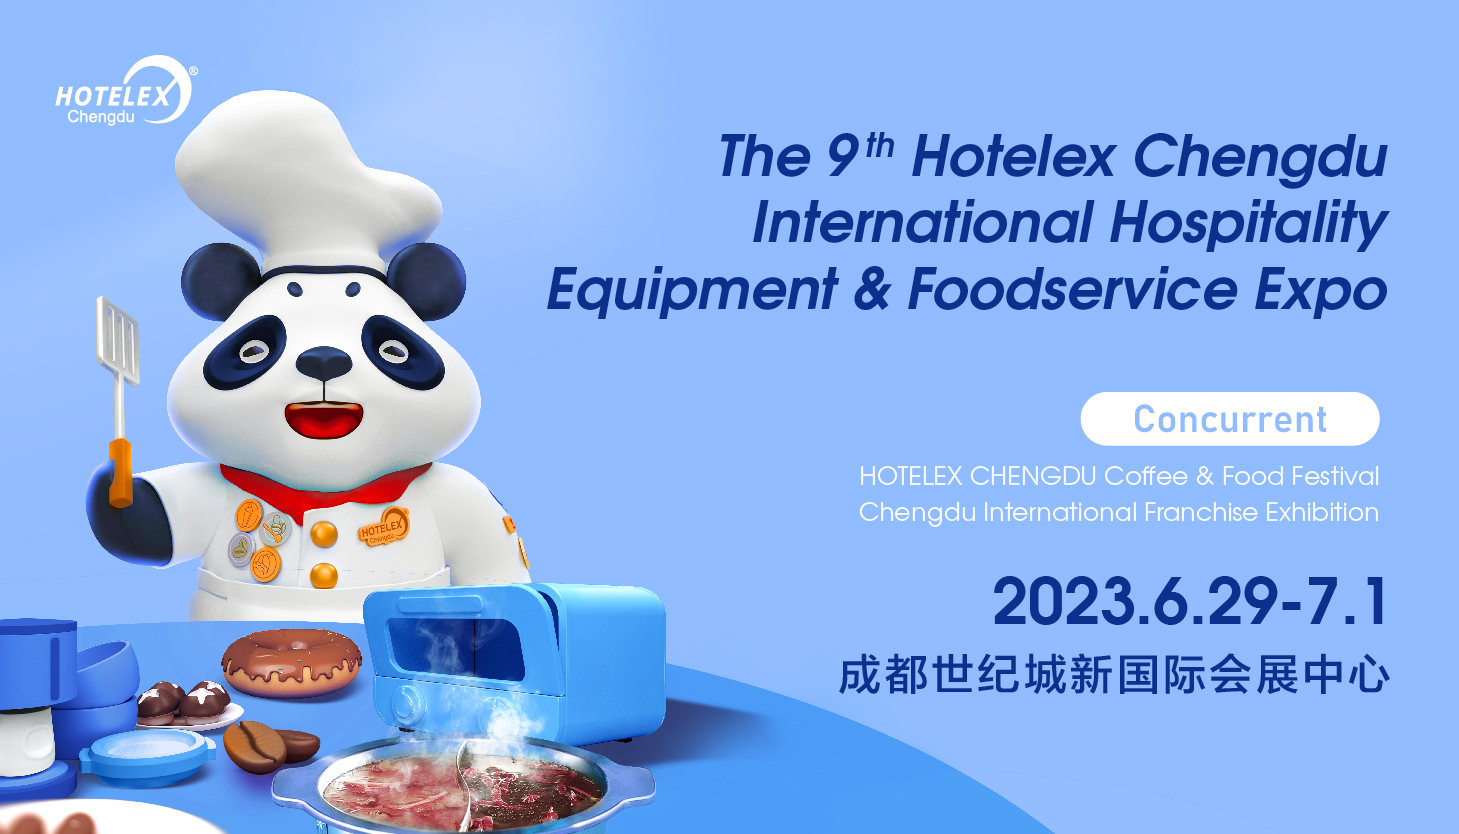 The 9th Hotelex Chengdu International Hospitality Equipment & Foodservice Expo